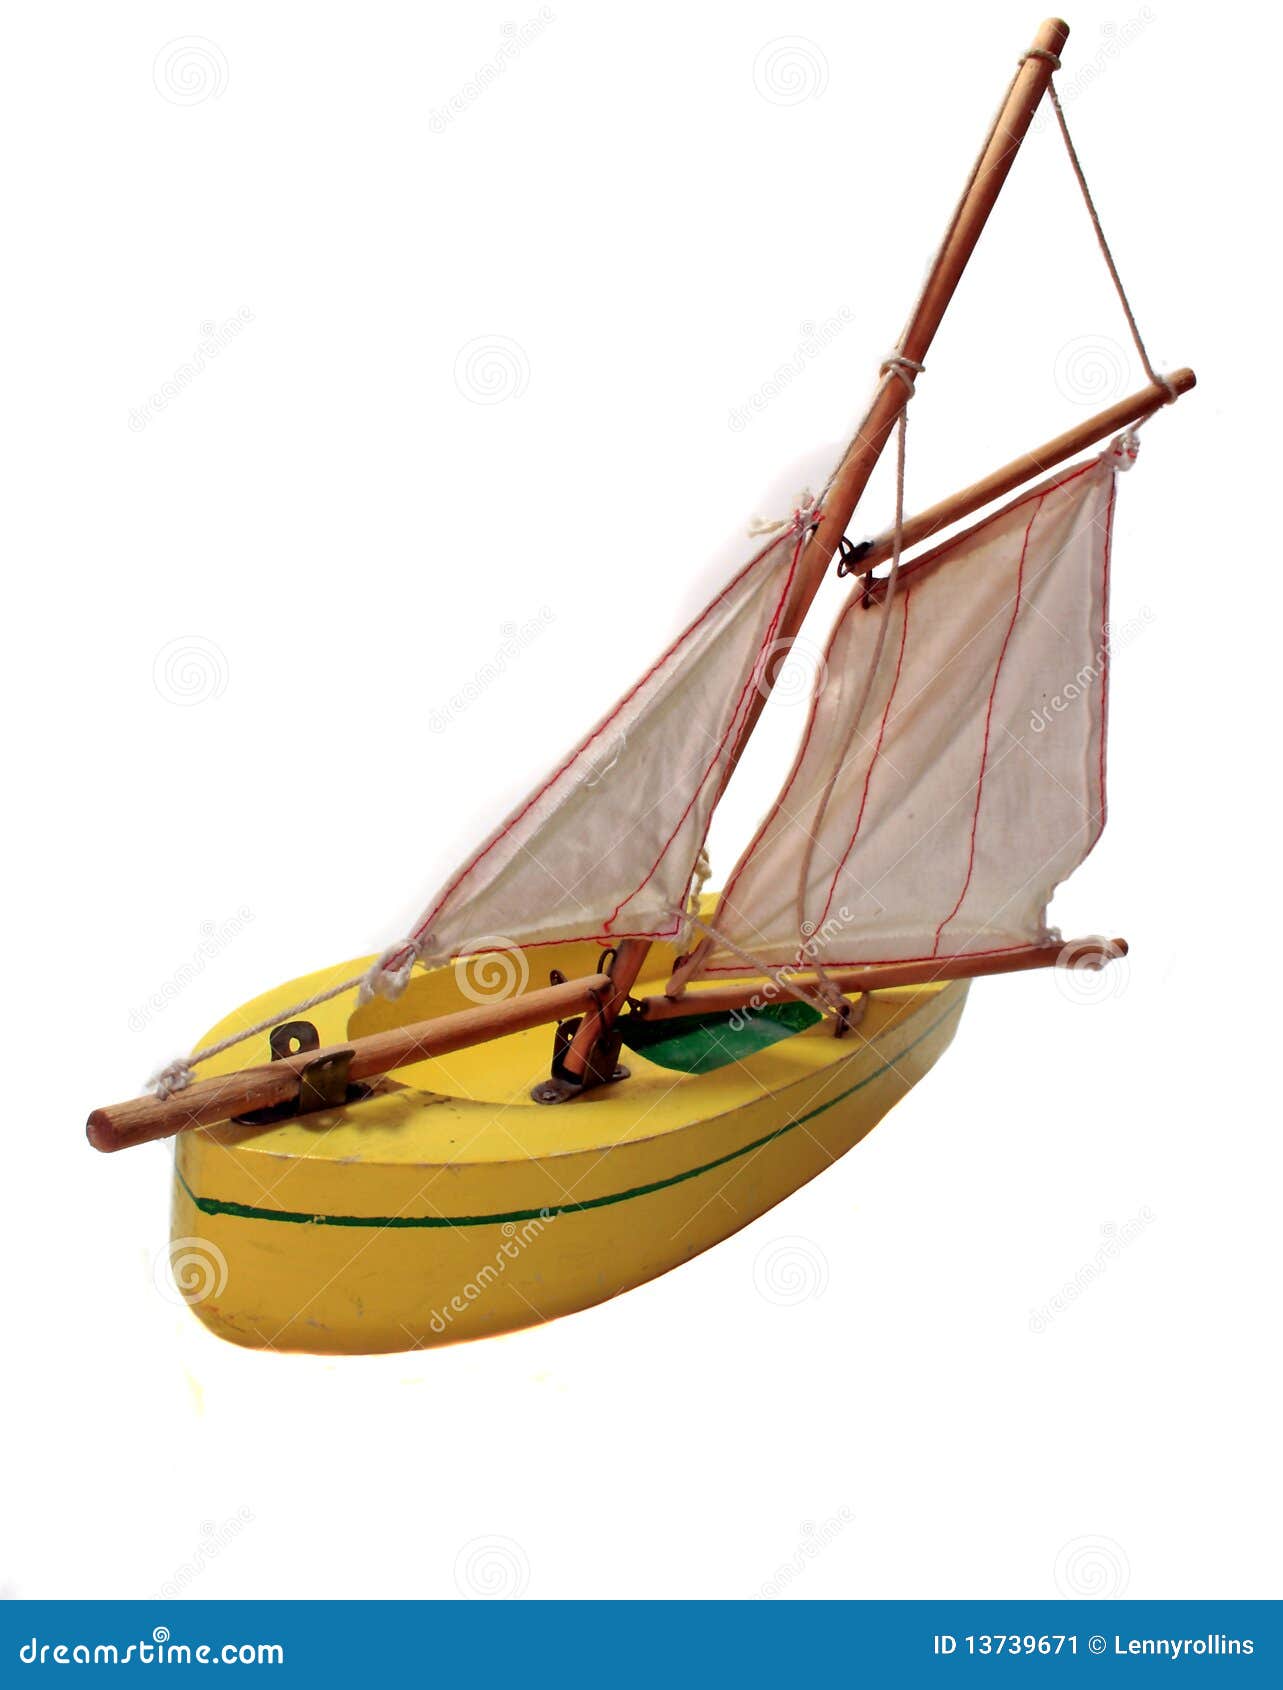 Yellow Wooden Toy Sailboat stock image. Image of cruising - 13739671